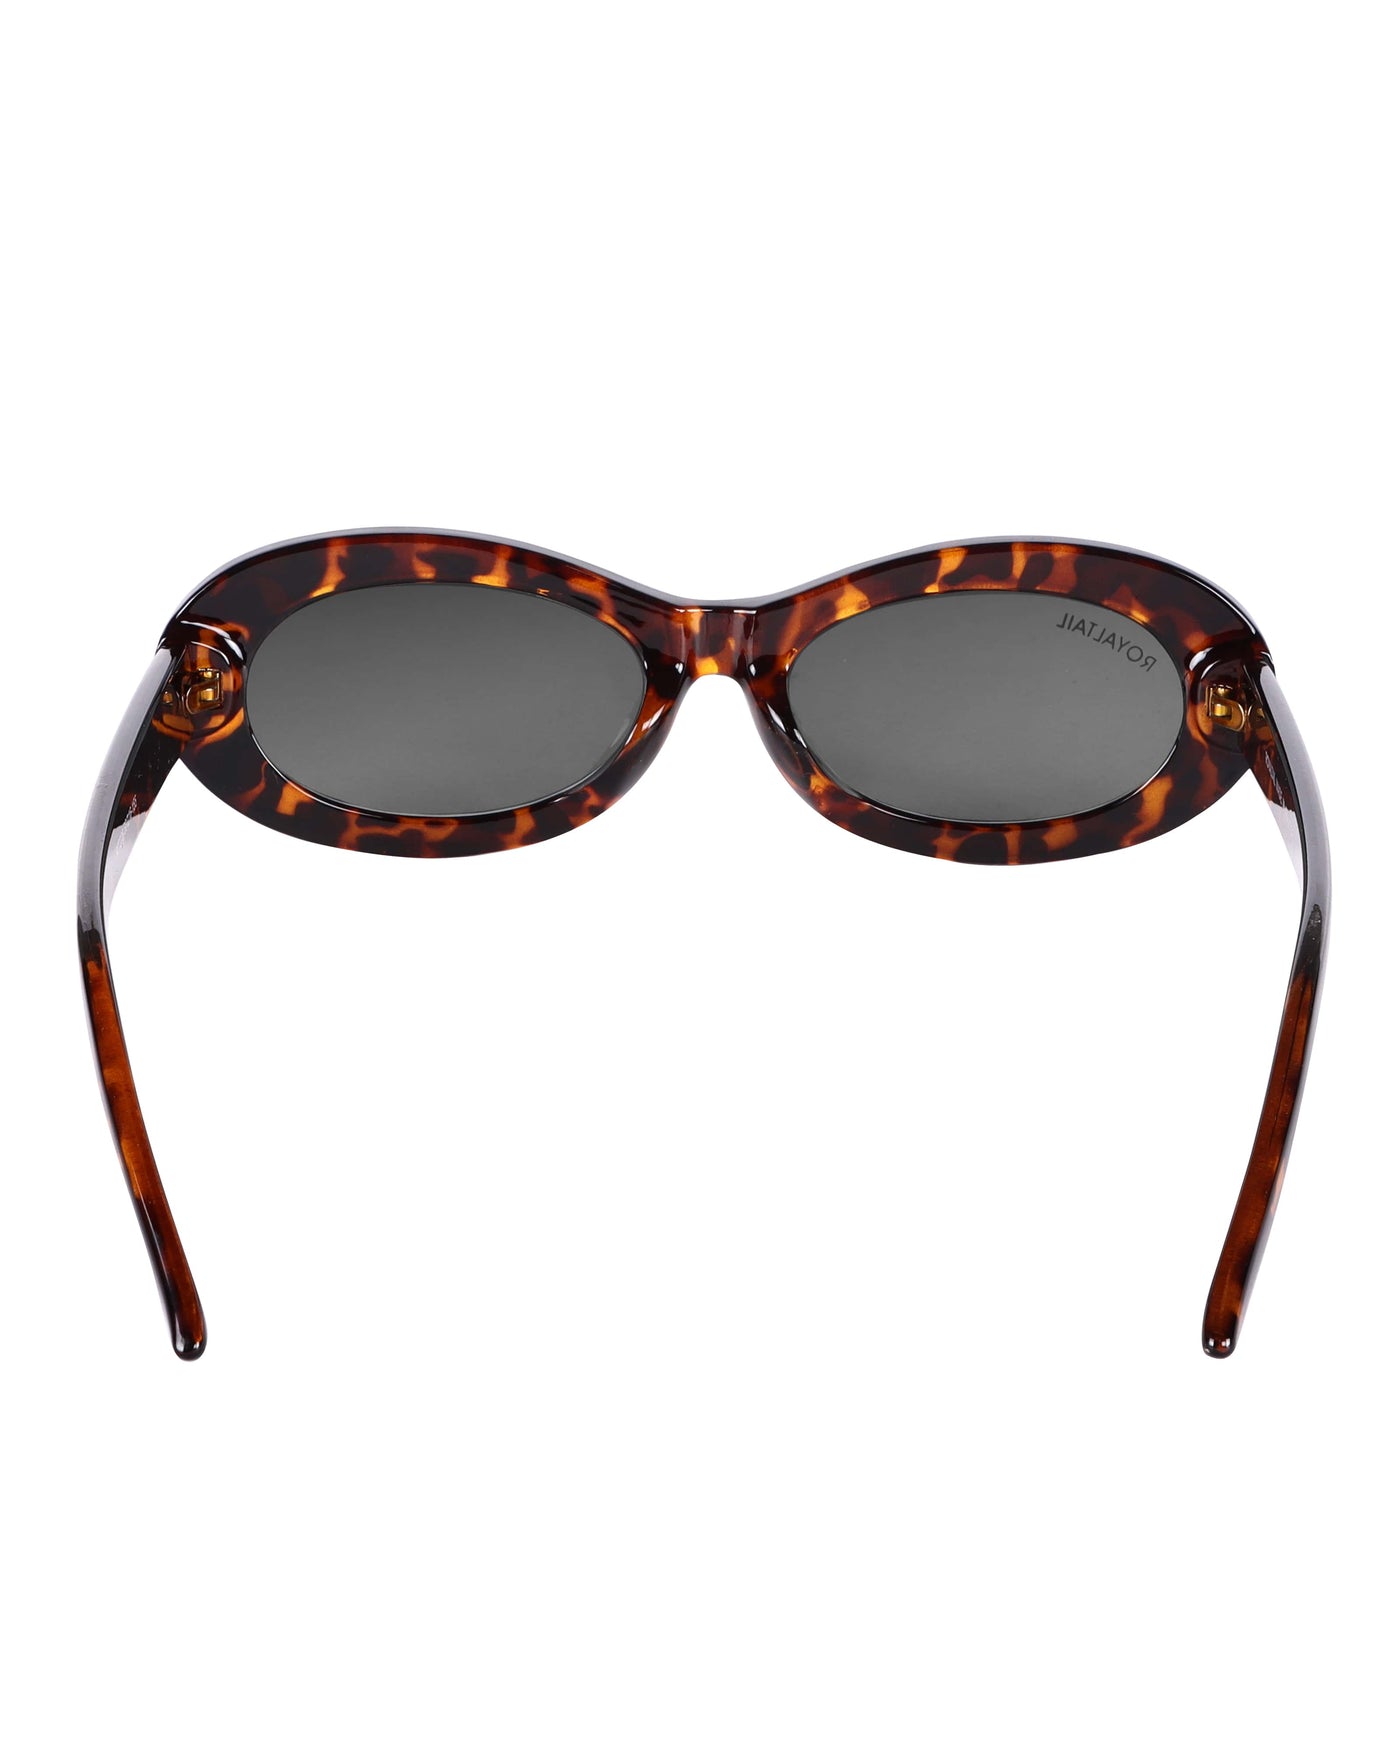 Narrow Oval Retro Tiger Black UV Protected Sunglasses RT065